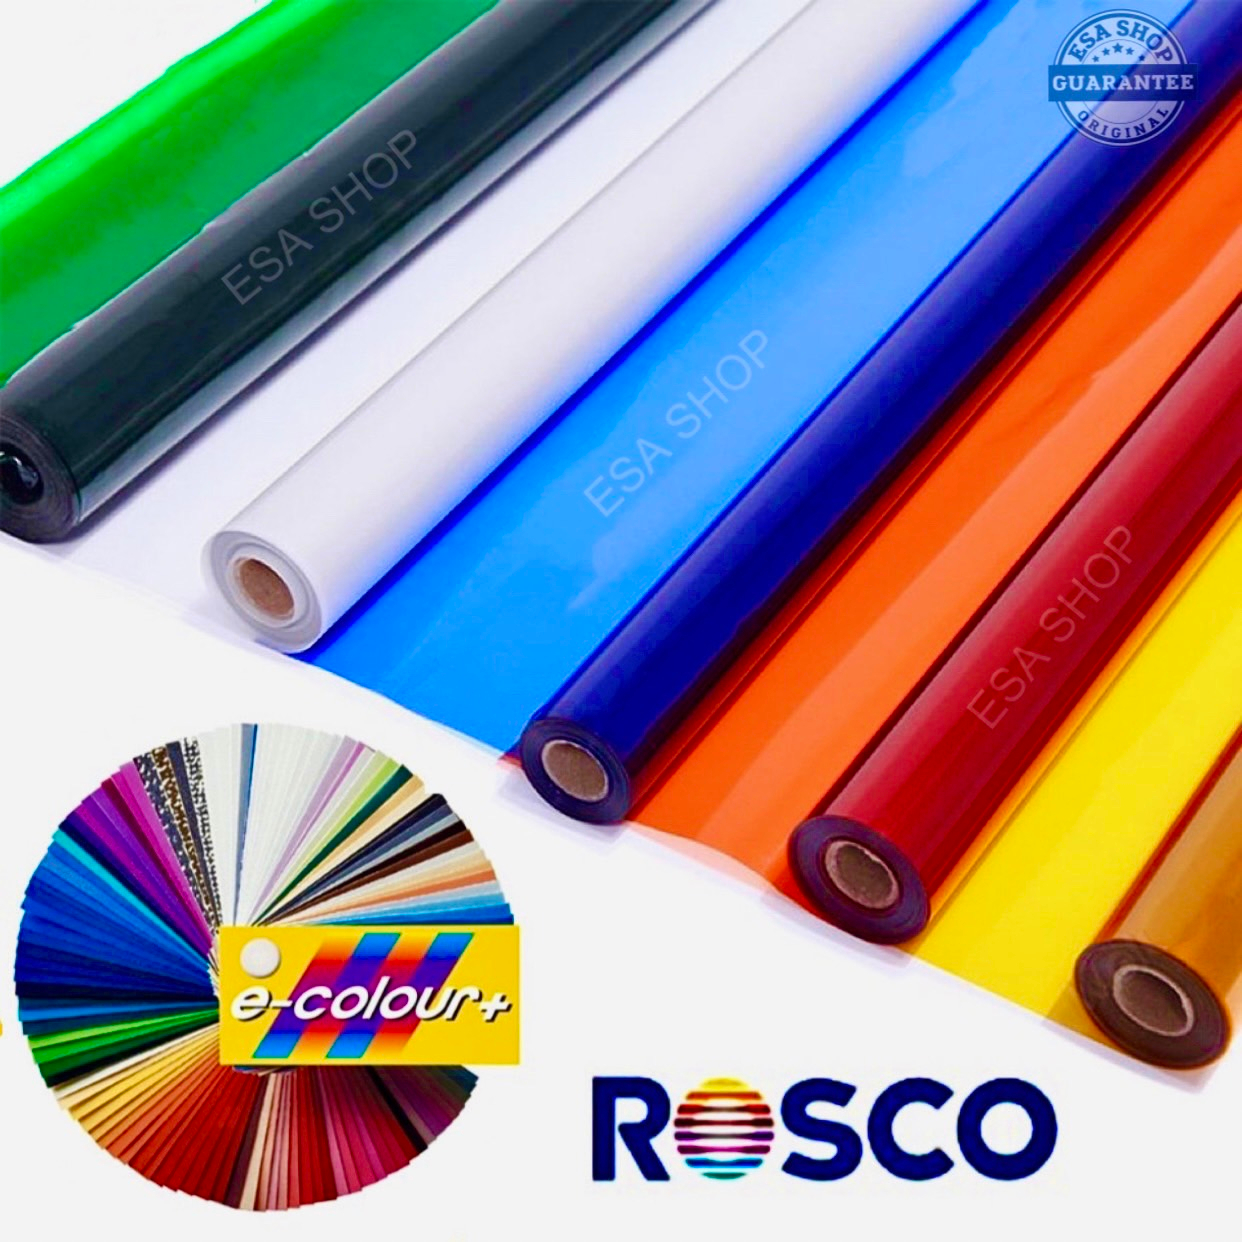 rosco-filters-e203-1-4-ct-blue-1-roll